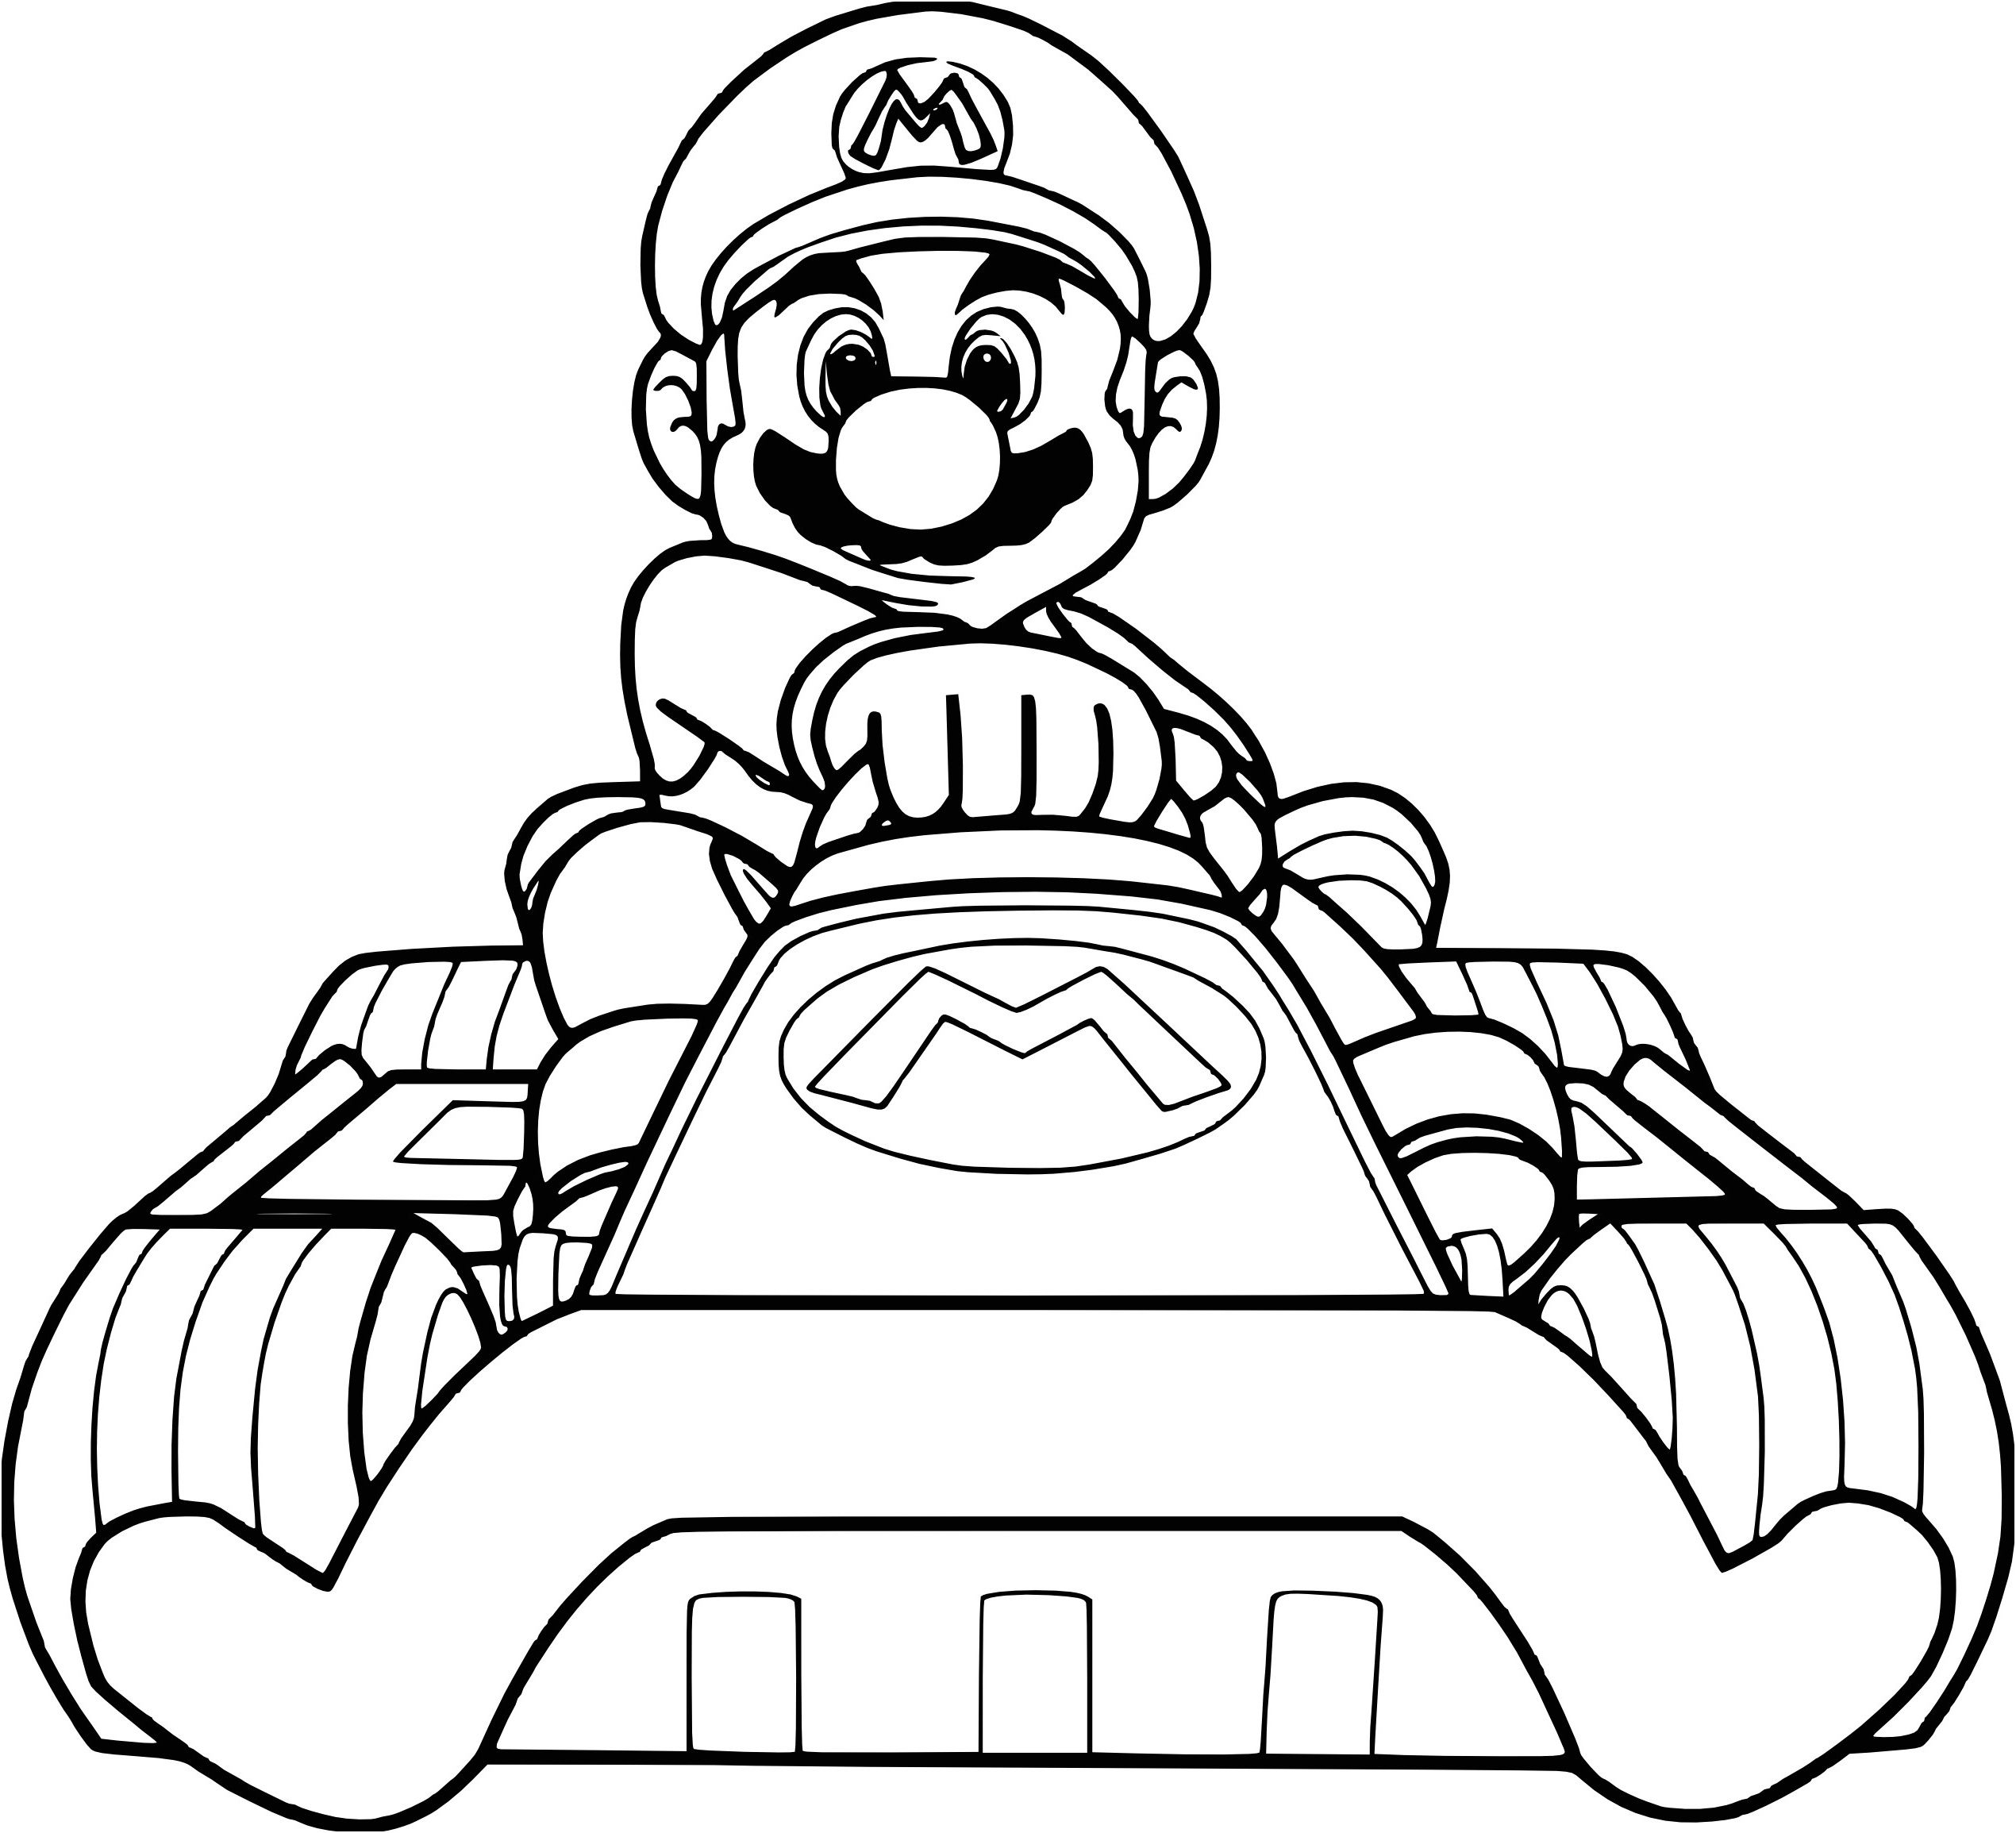 8 Vivant Coloriage De Mario Pictures En 2020 | Coloriage à Coloriage Mario Kart 7